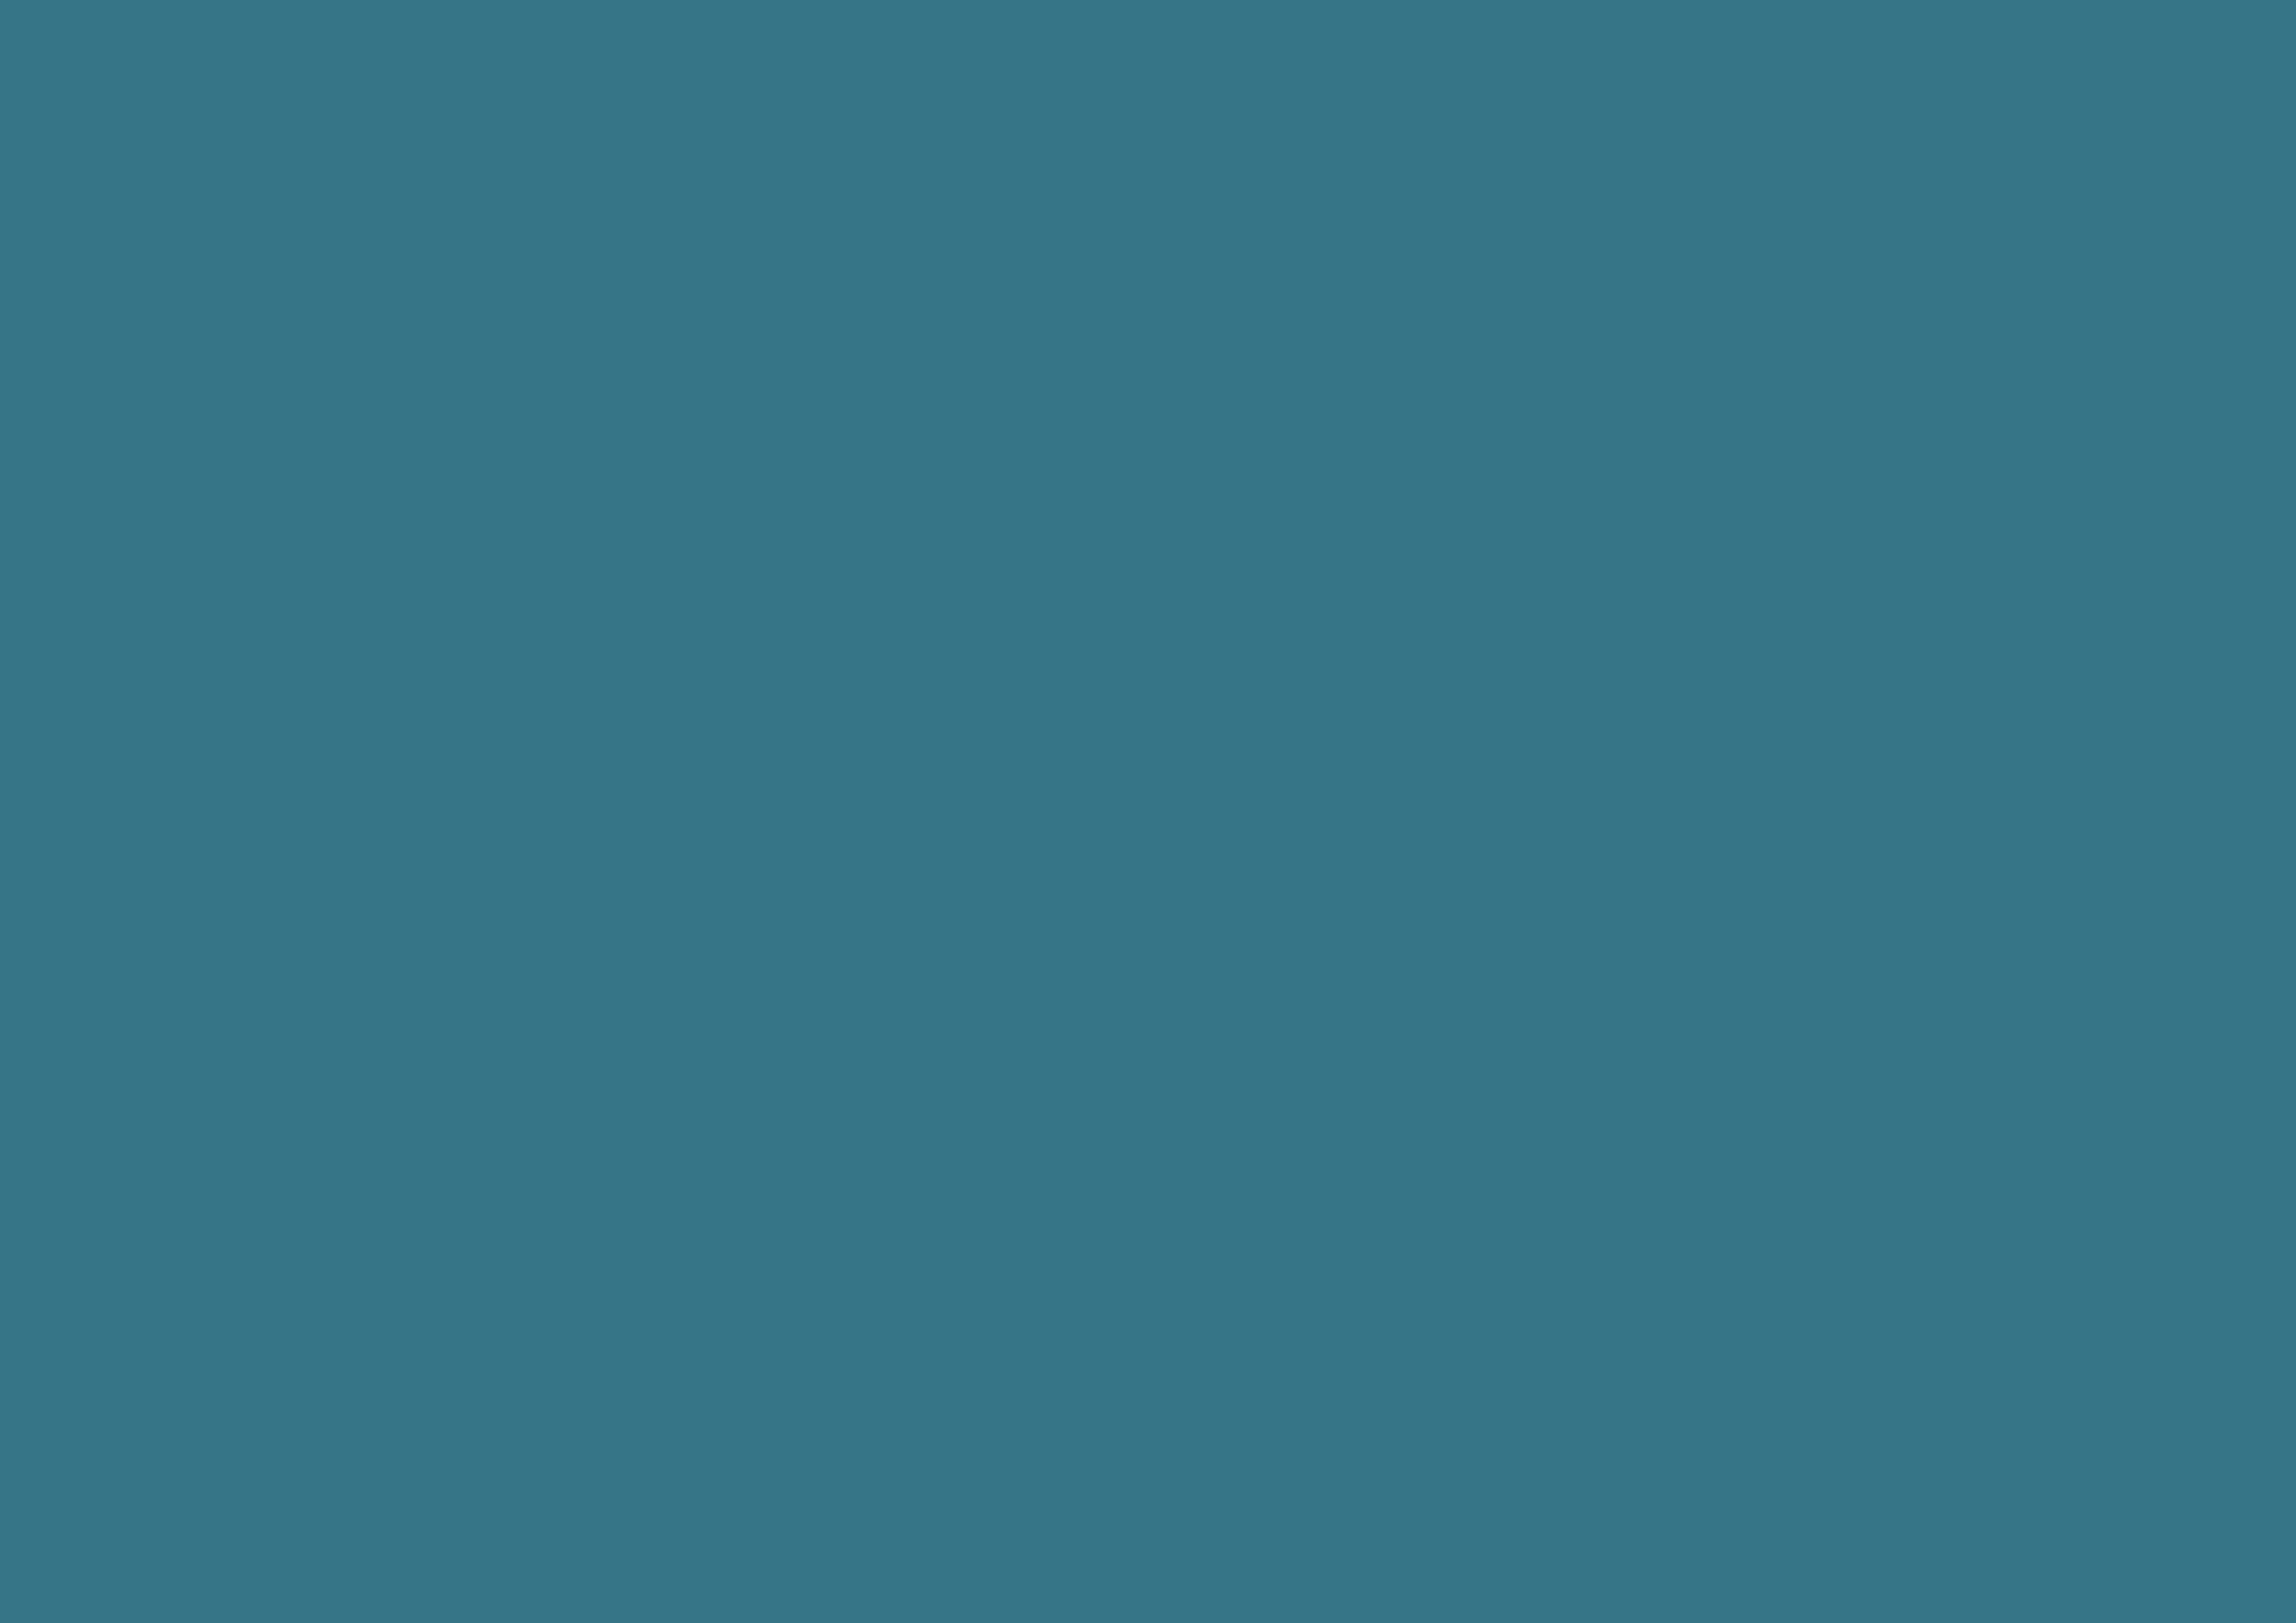 3508x2480 Teal Blue Solid Color Background